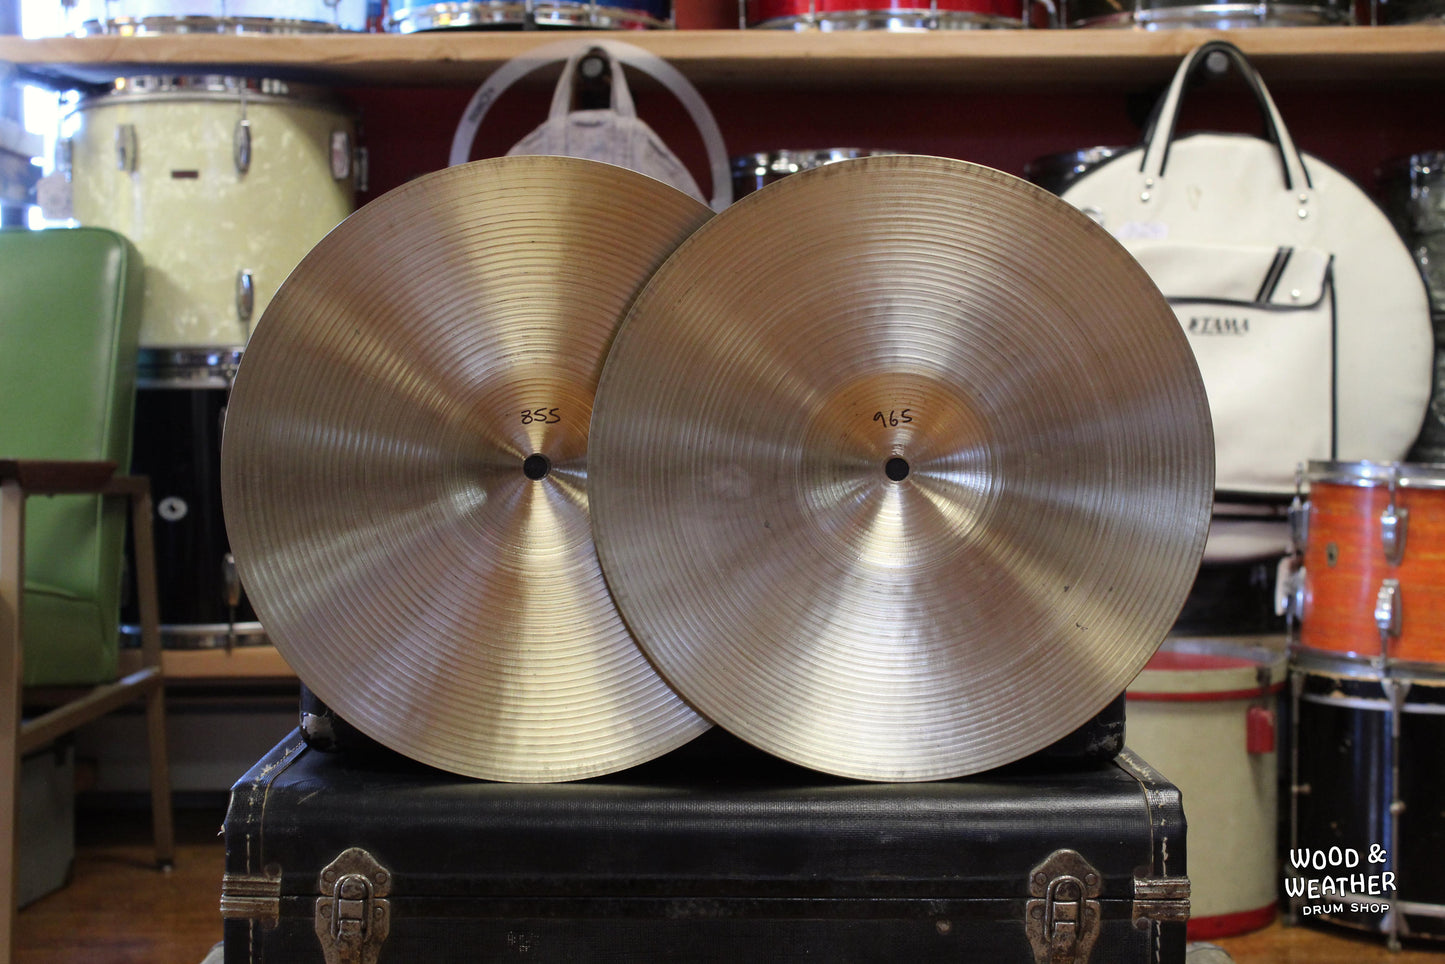 1980s Zildjian 13" New Beat Hi Hat Cymbals 855/965g